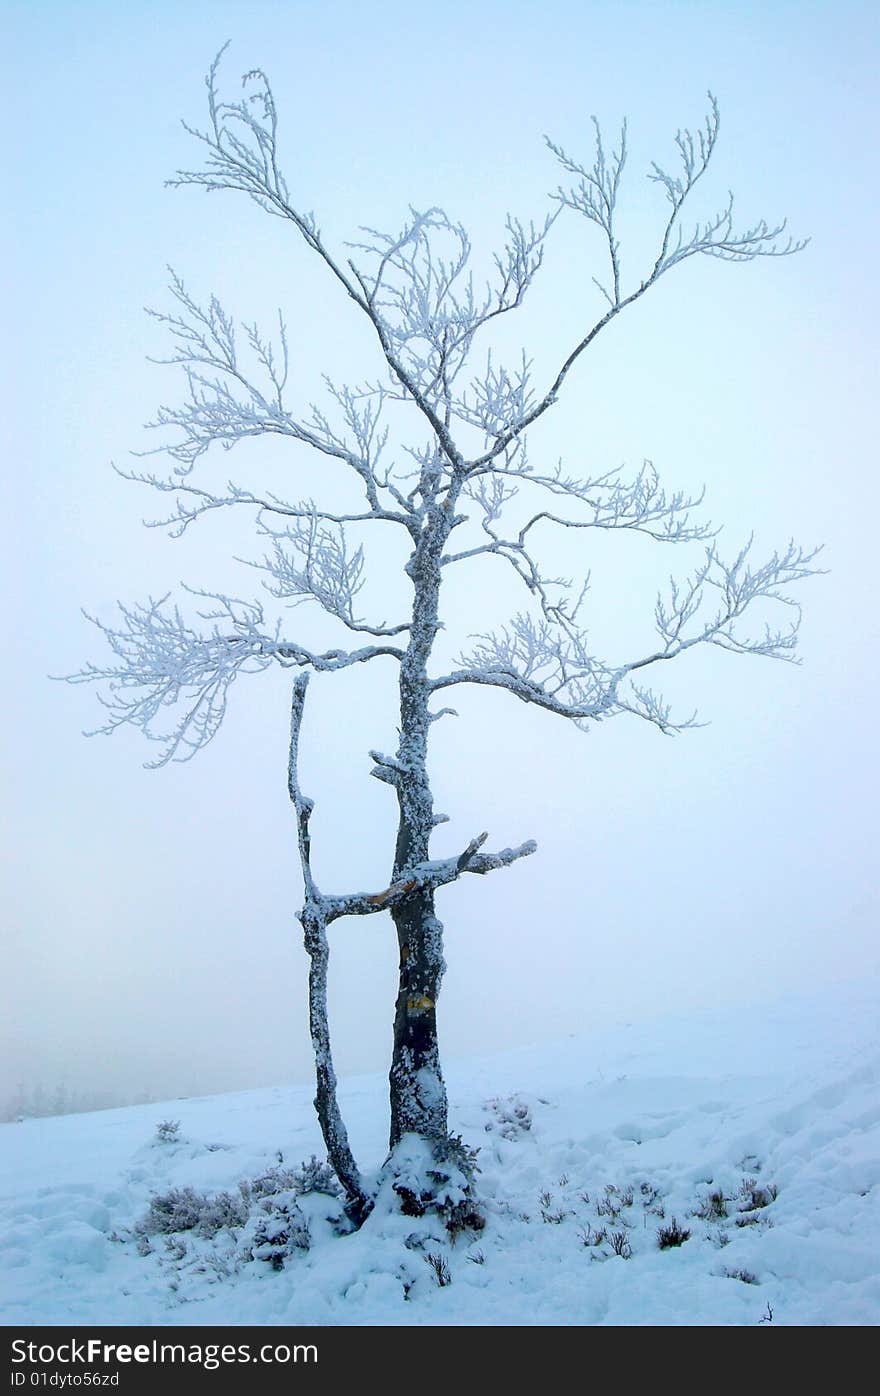 Snowy tree on misty background. Snowy tree on misty background